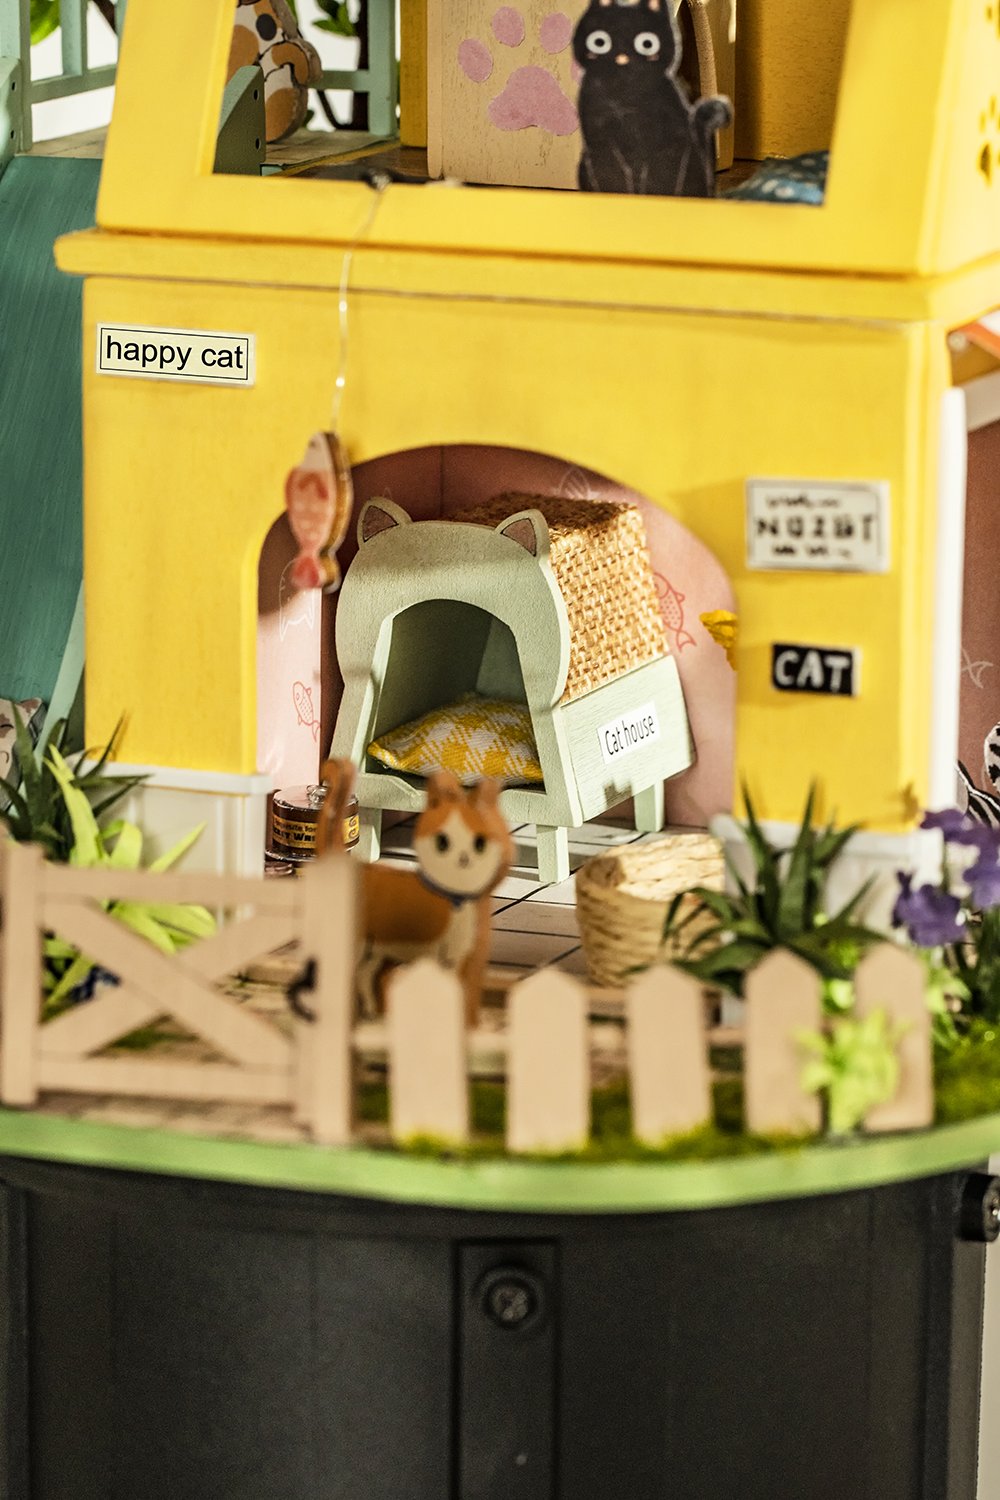 Robotime Cat House Model - Paper